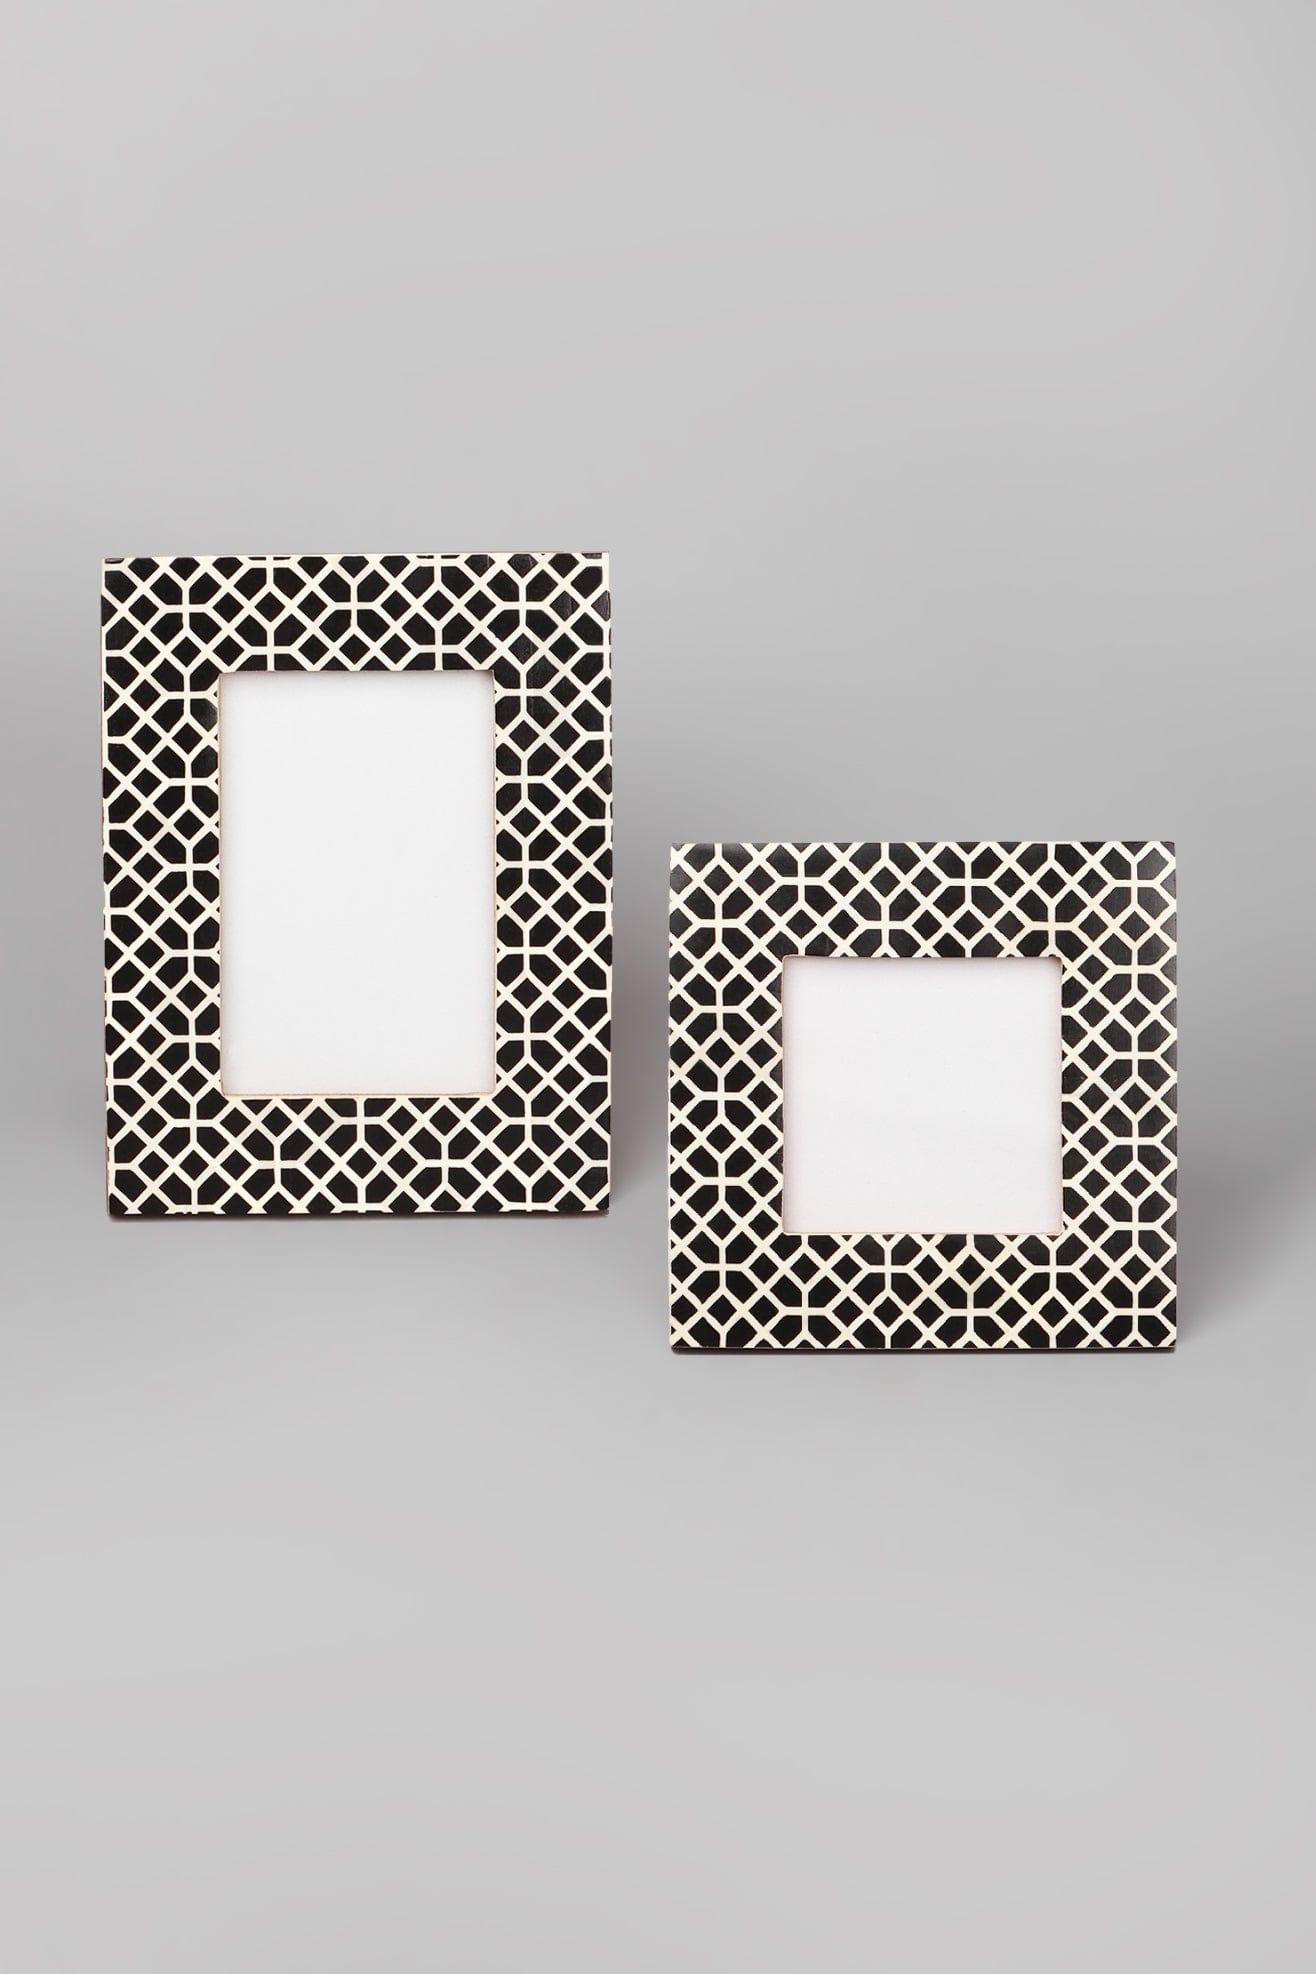 G Decor Picture frames Black Puzzle Effect Stylish Photo Frames